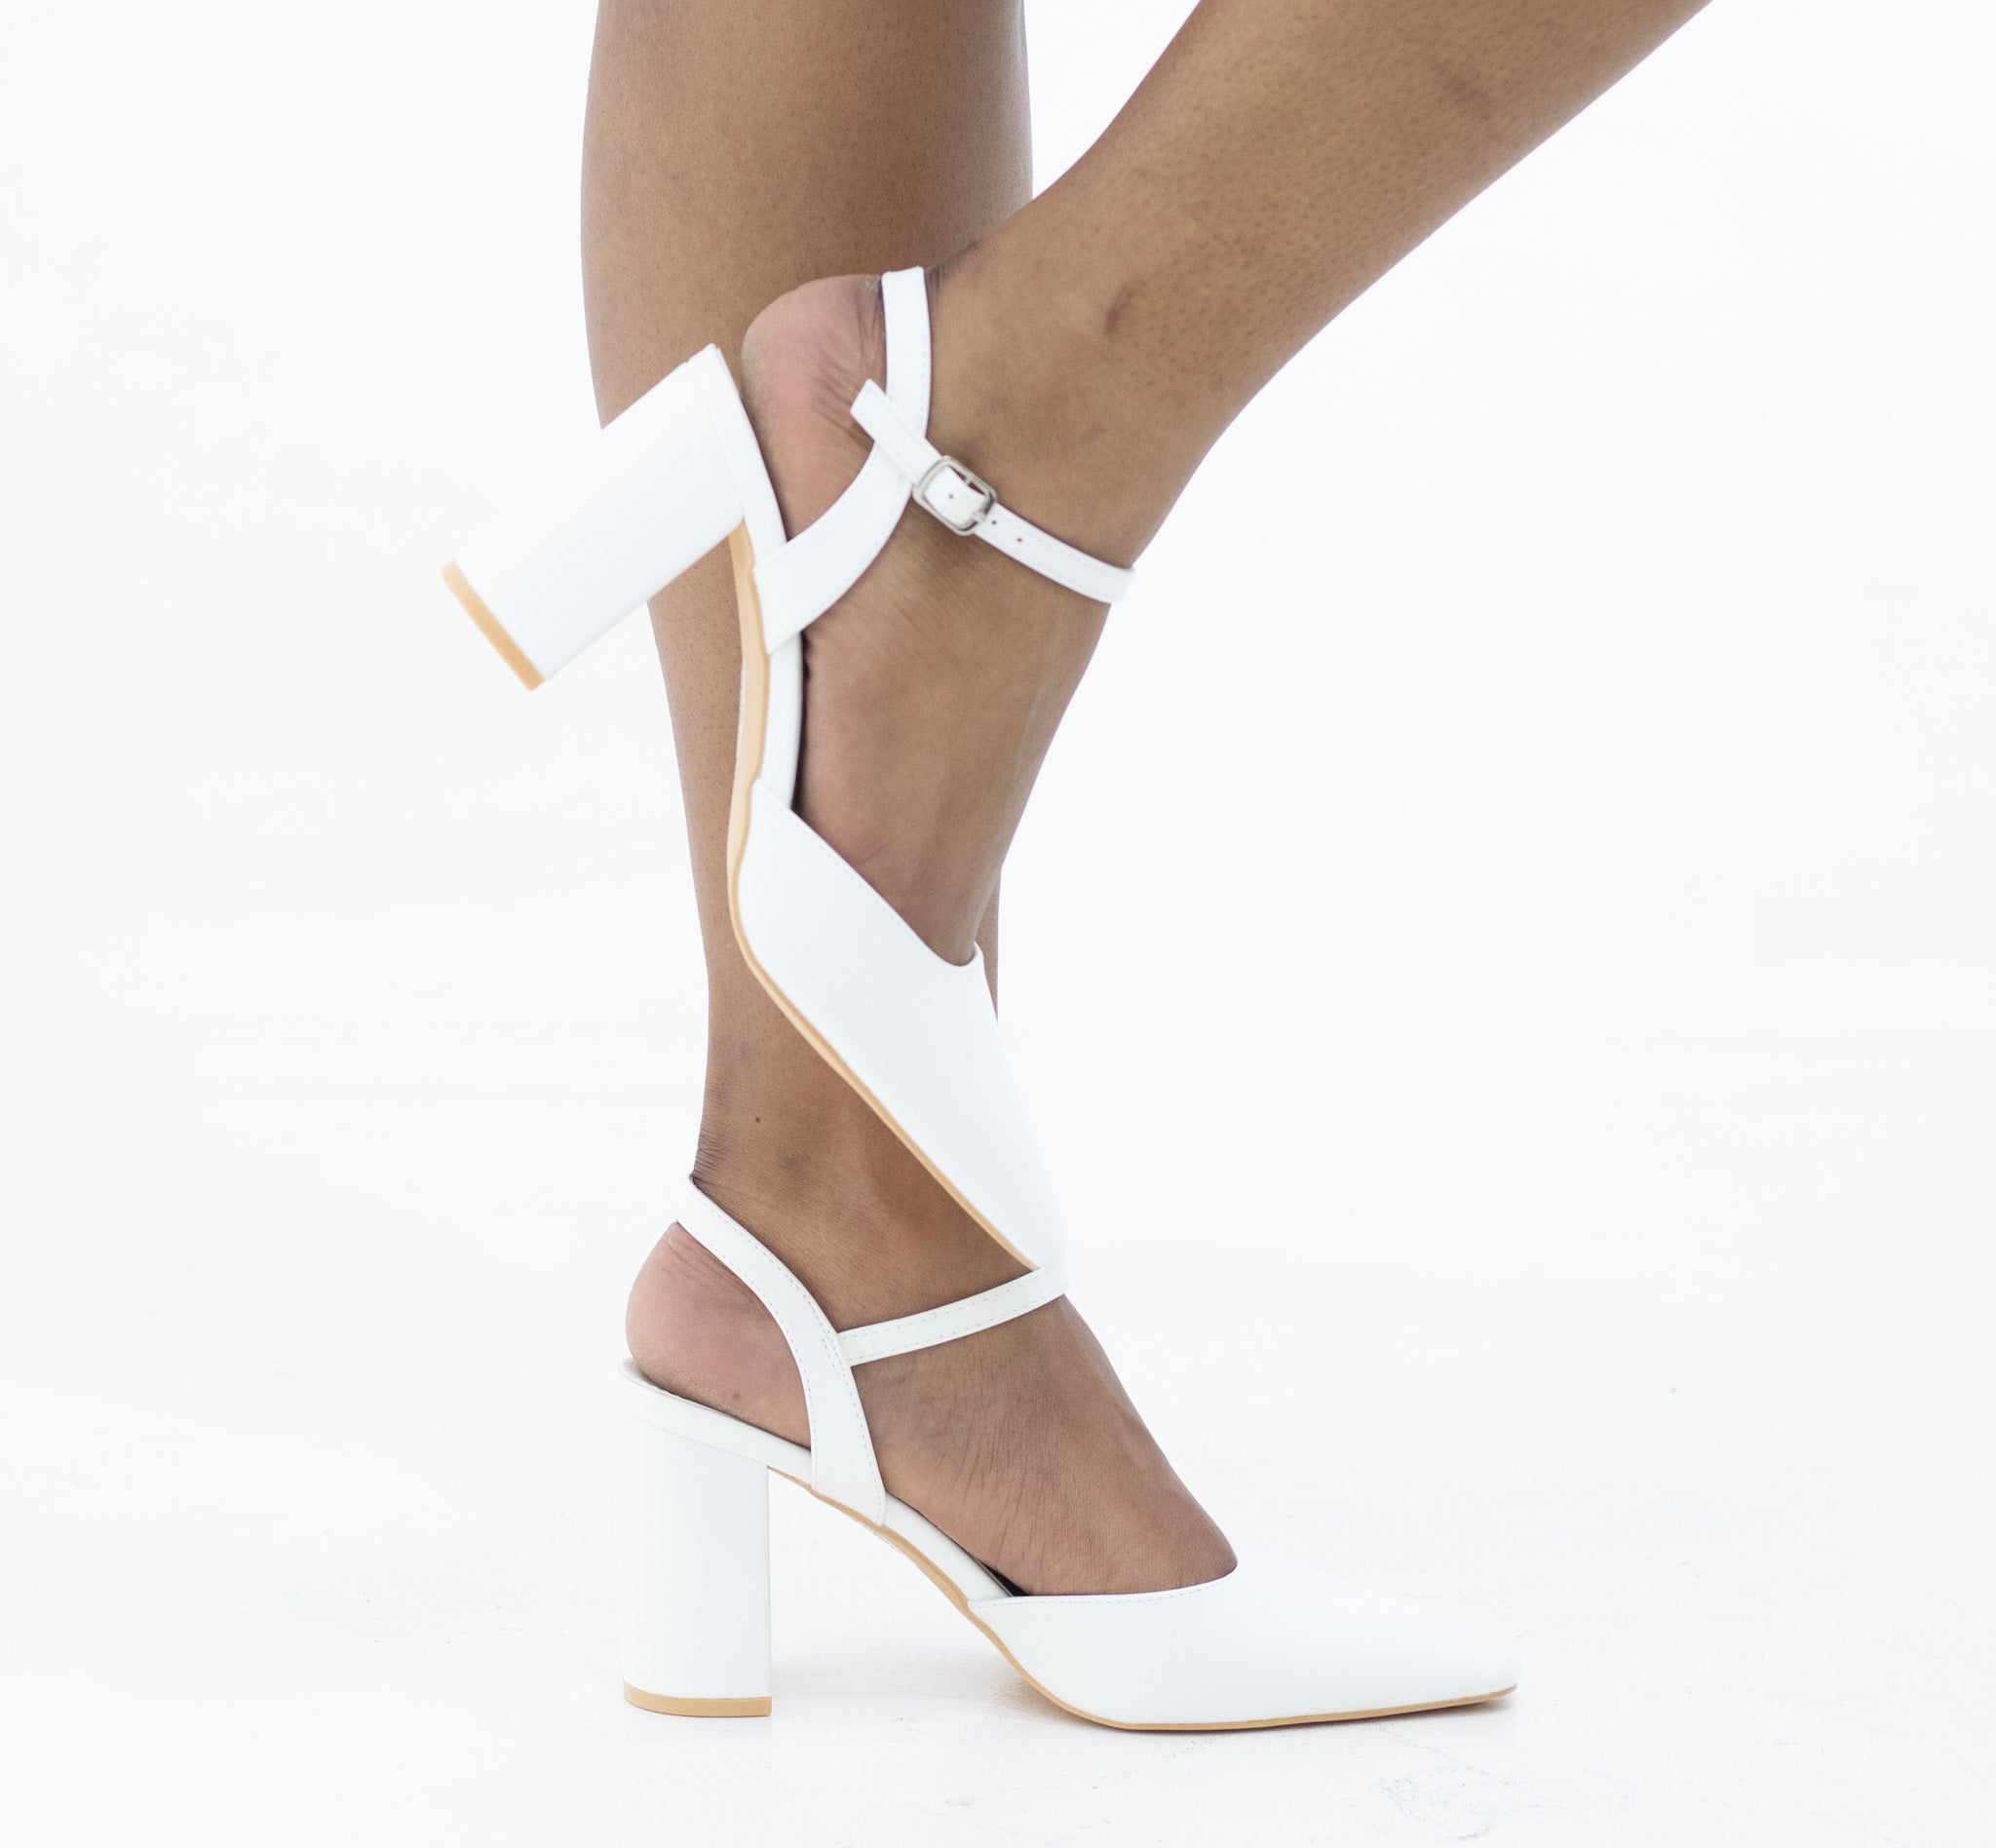 White ankle strap shoe on 8cm heel tulpano